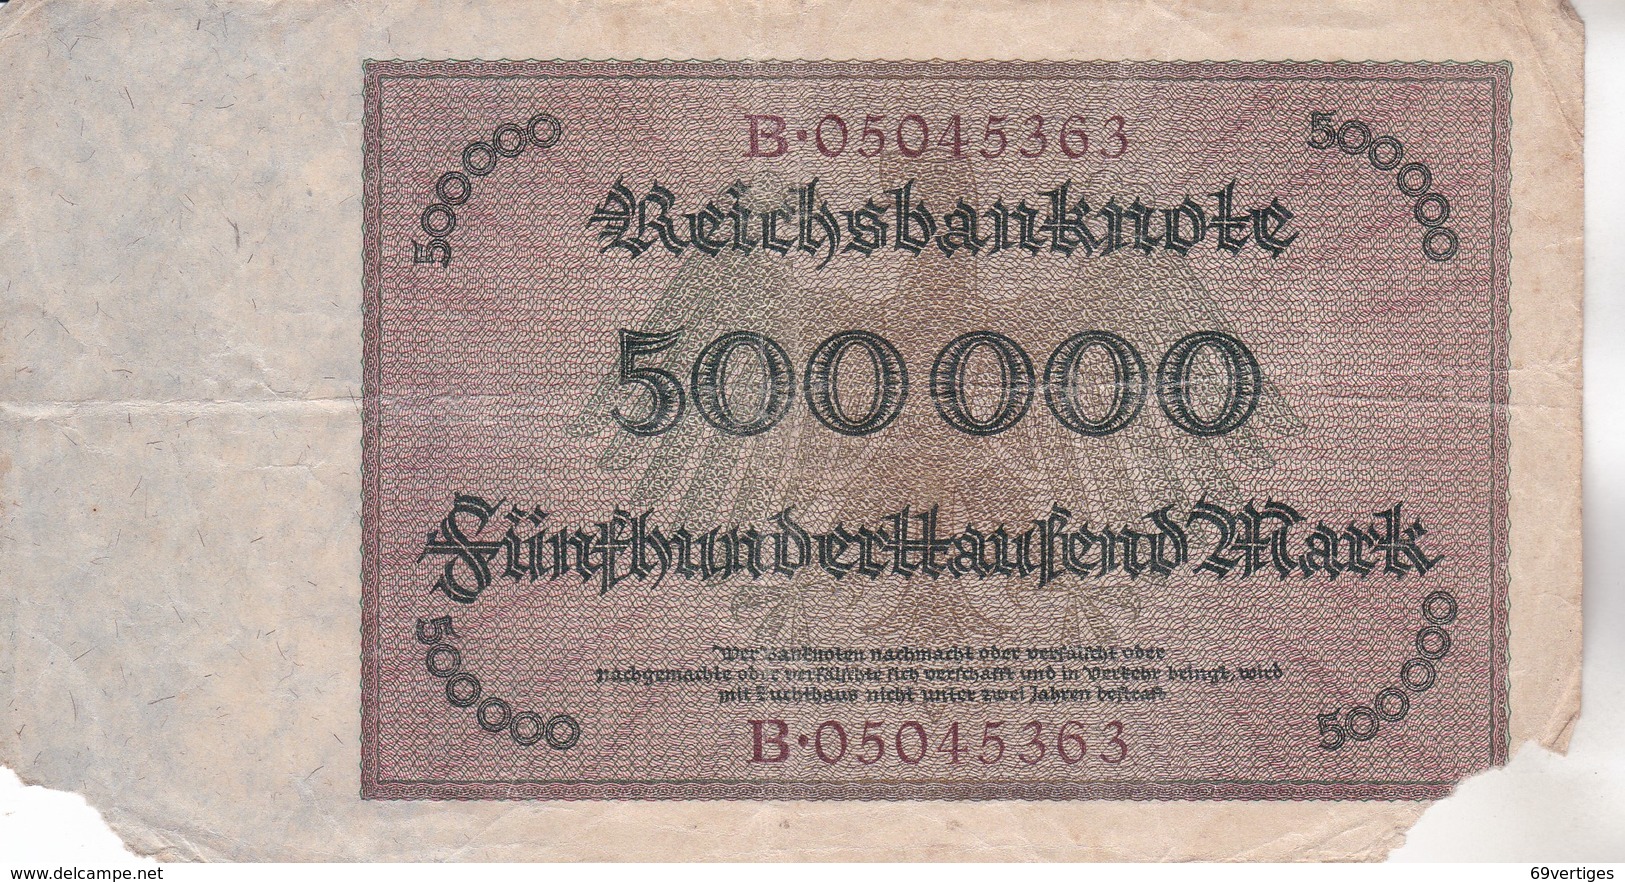 500 000 MARK, Berlin 1925, B 05045363 - 500.000 Mark